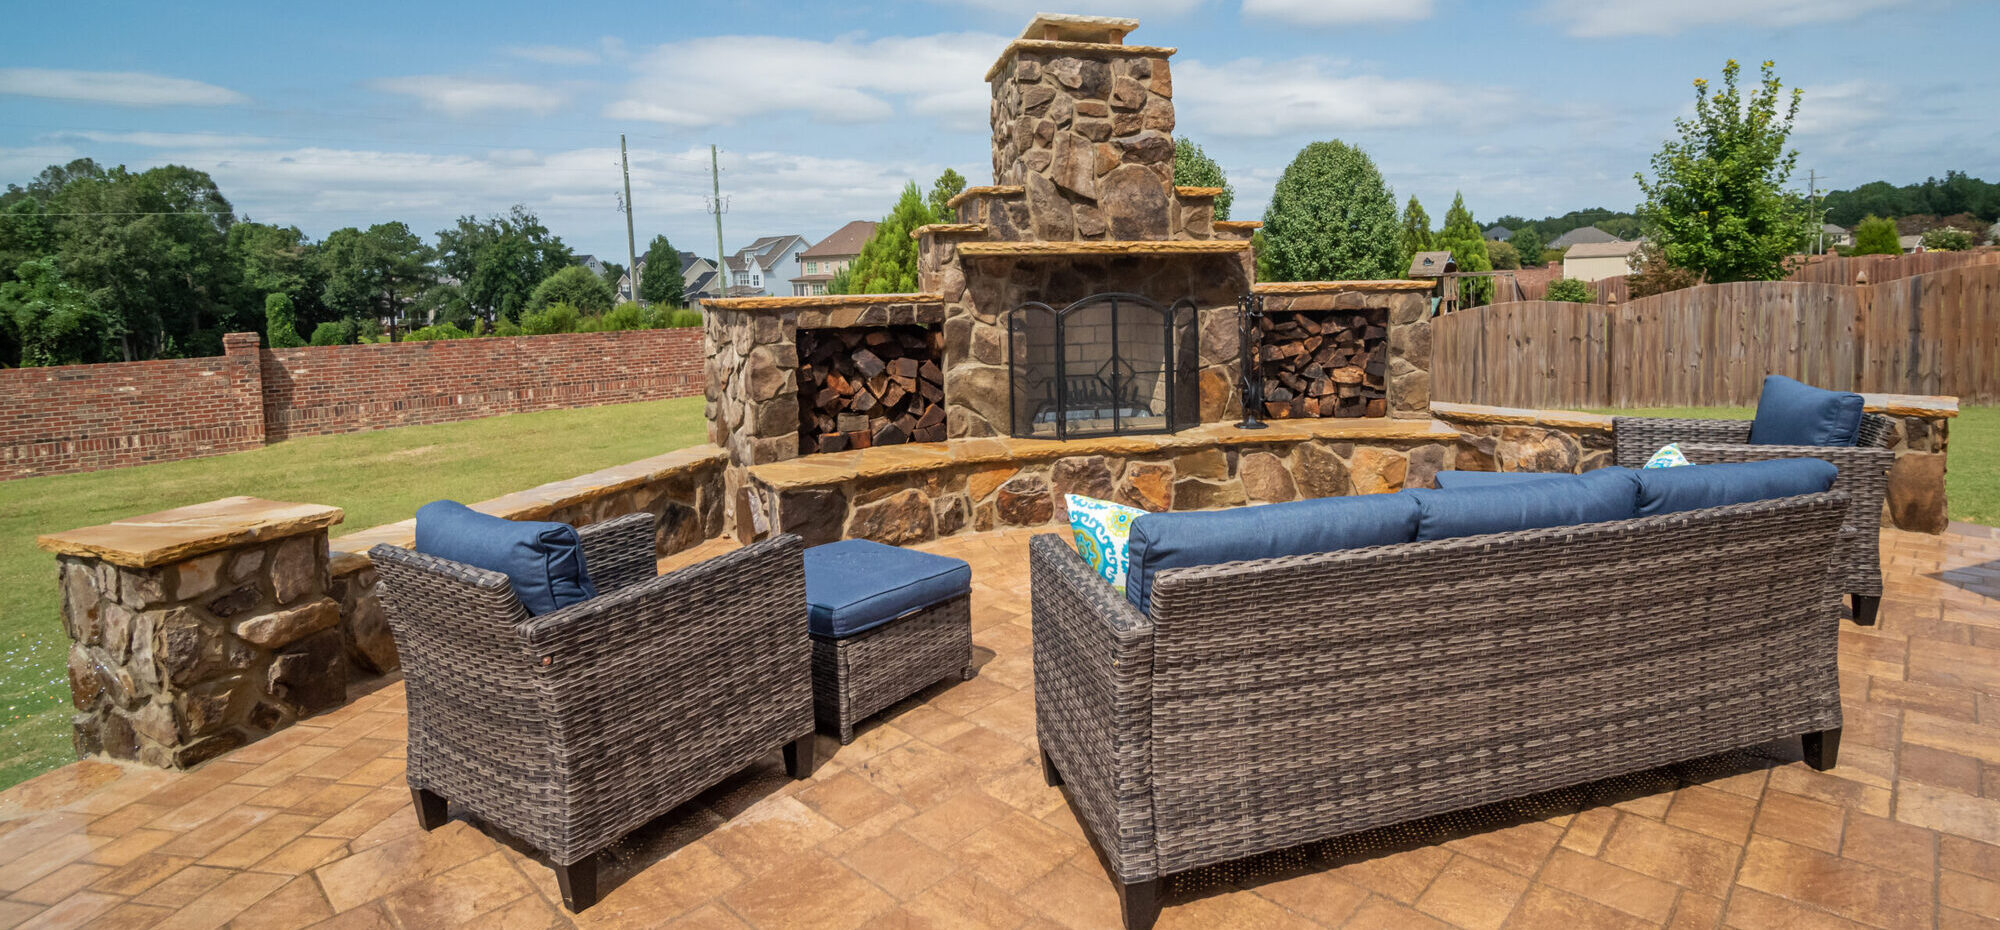 COVIS custom outdoor fireplace, patio pavers and retaining wall